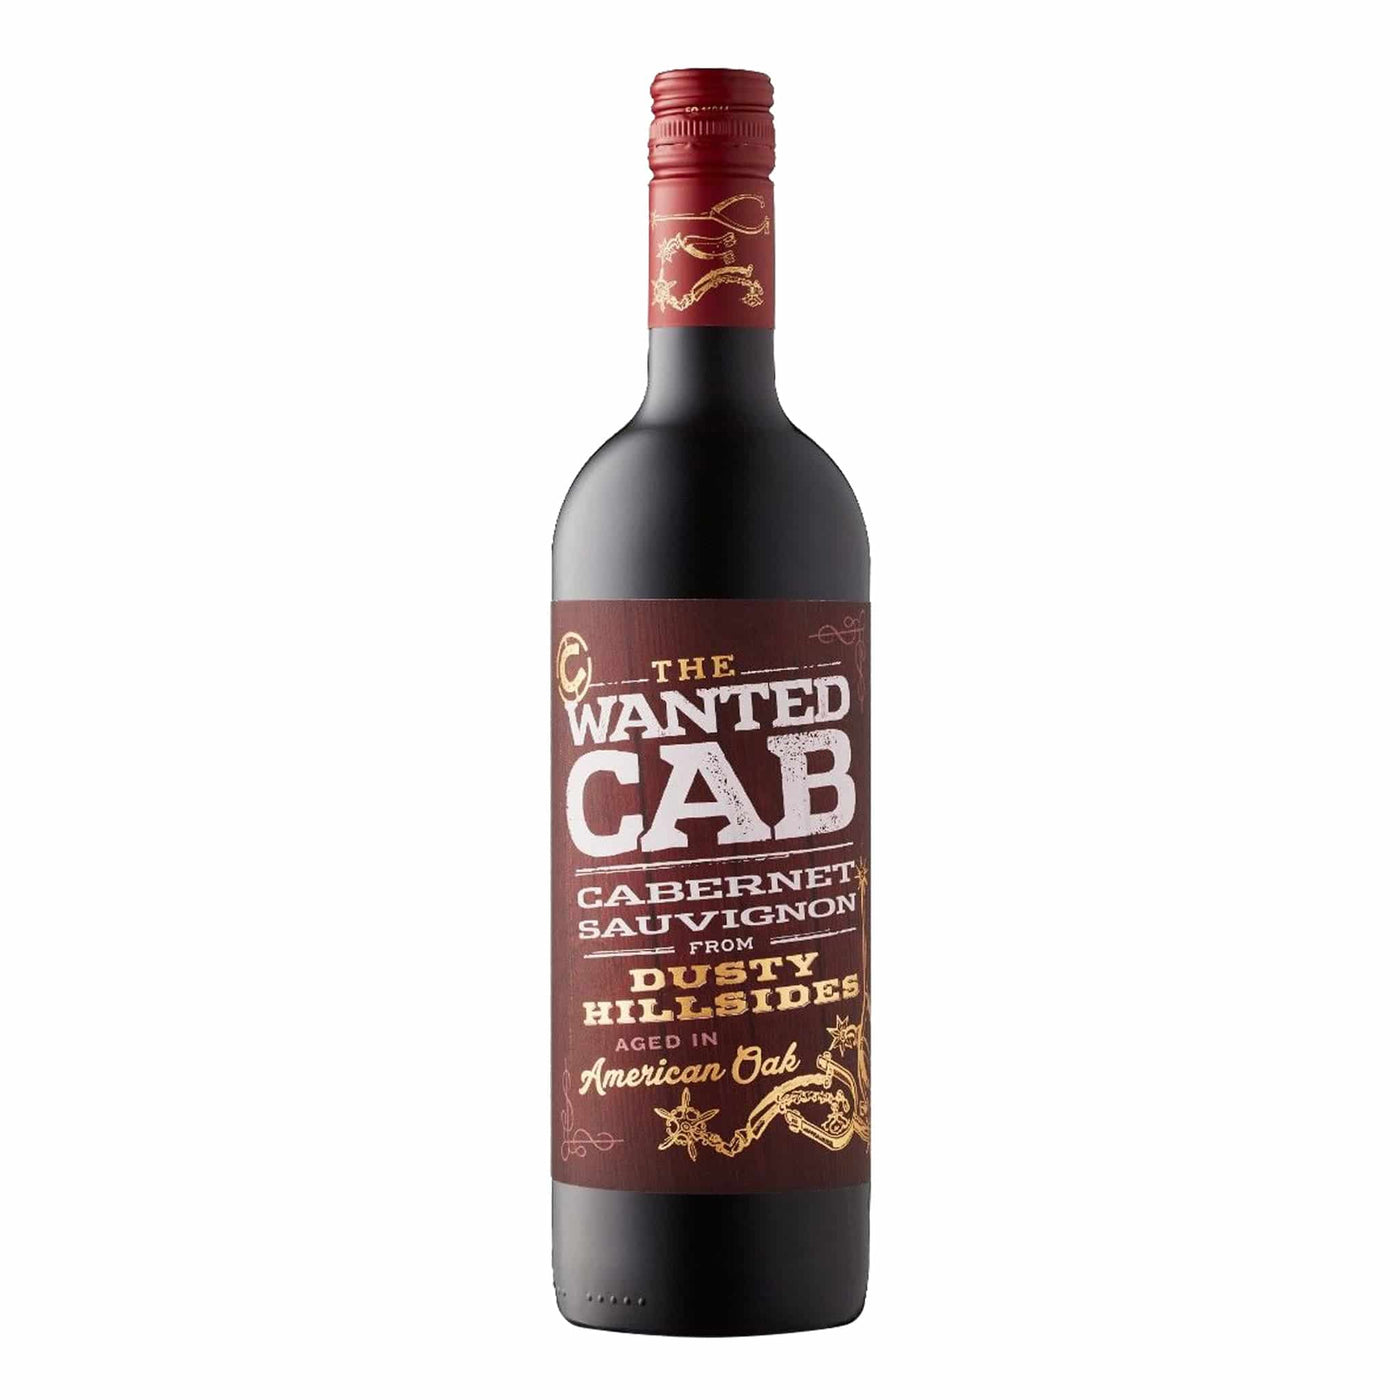 The Wanted “CAB” Cabernet Sauvignon